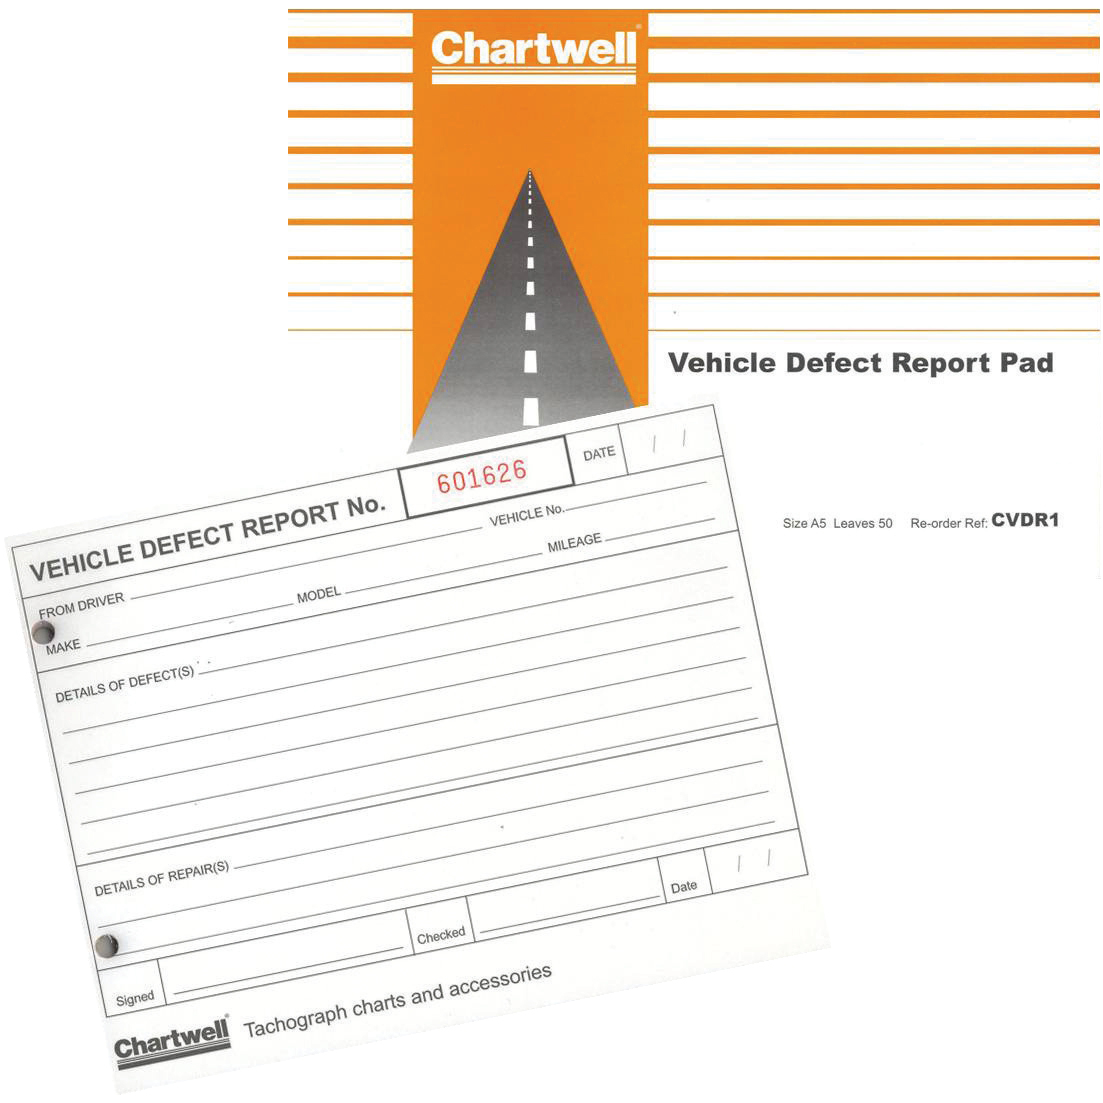 Chartwell Pad Tacho Vehicle DefectReport